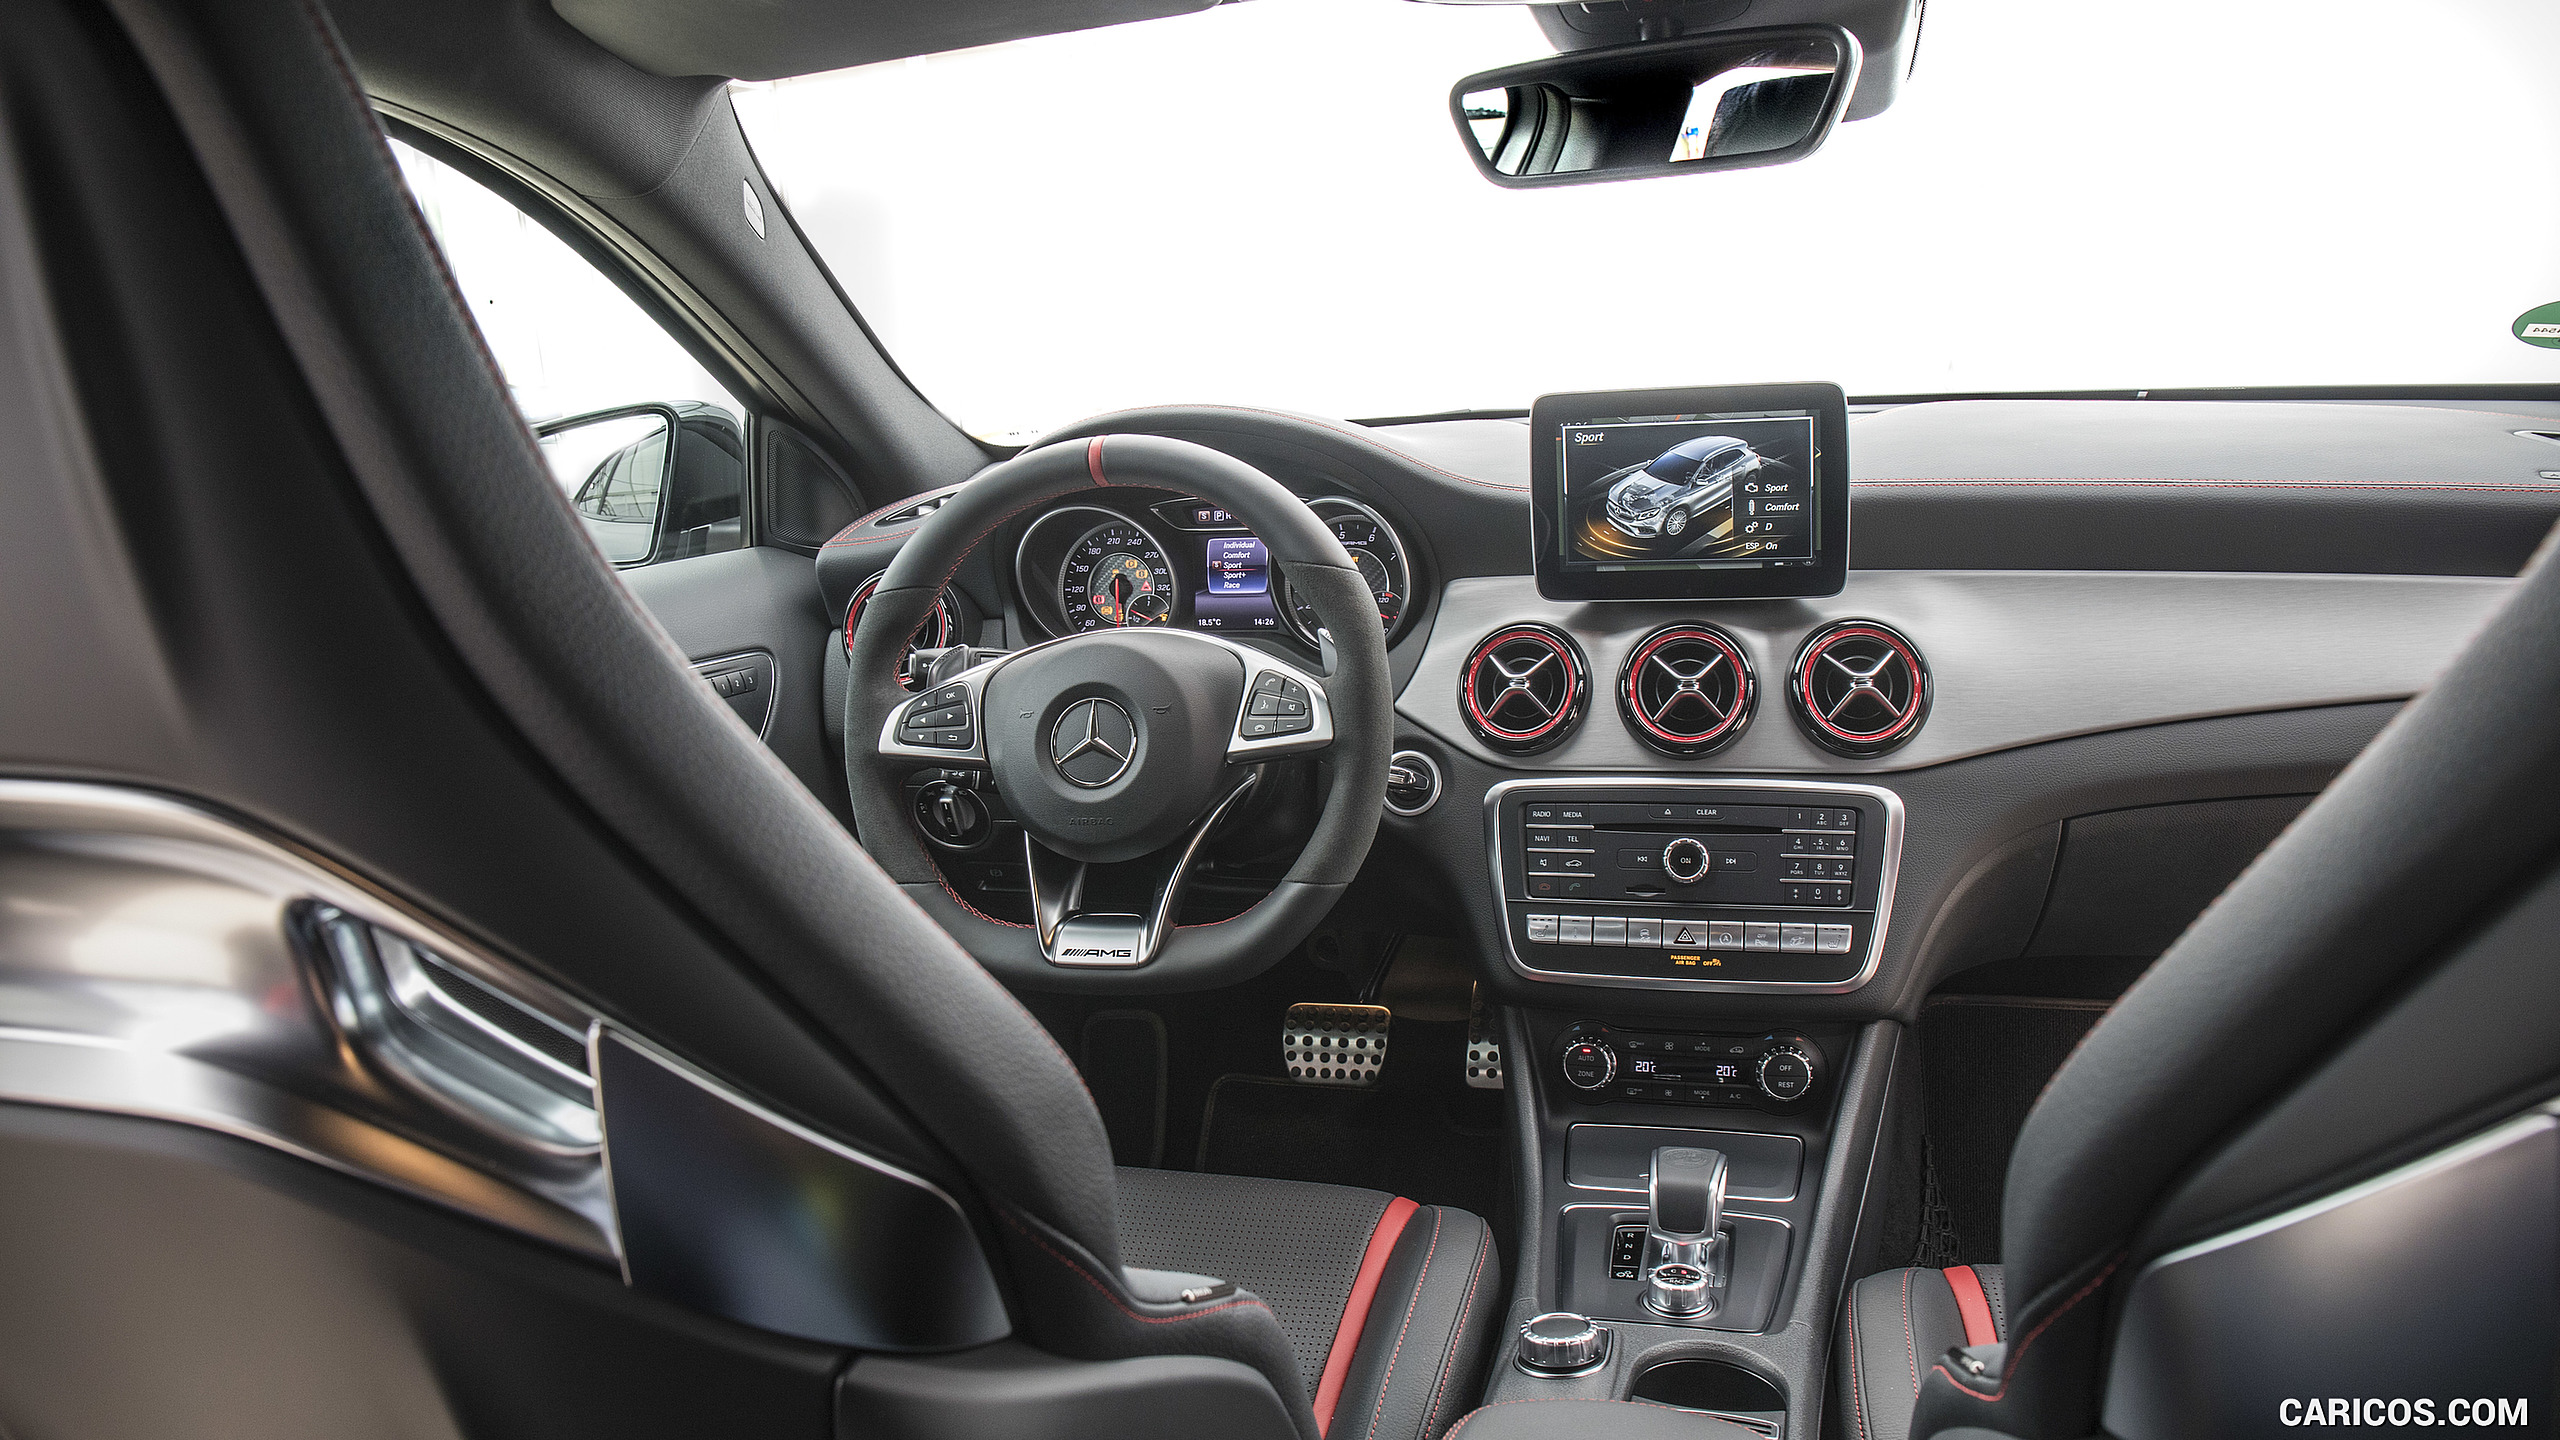 2018 Mercedes-AMG GLA 45 4MATIC - Interior, Cockpit, #85 of 88